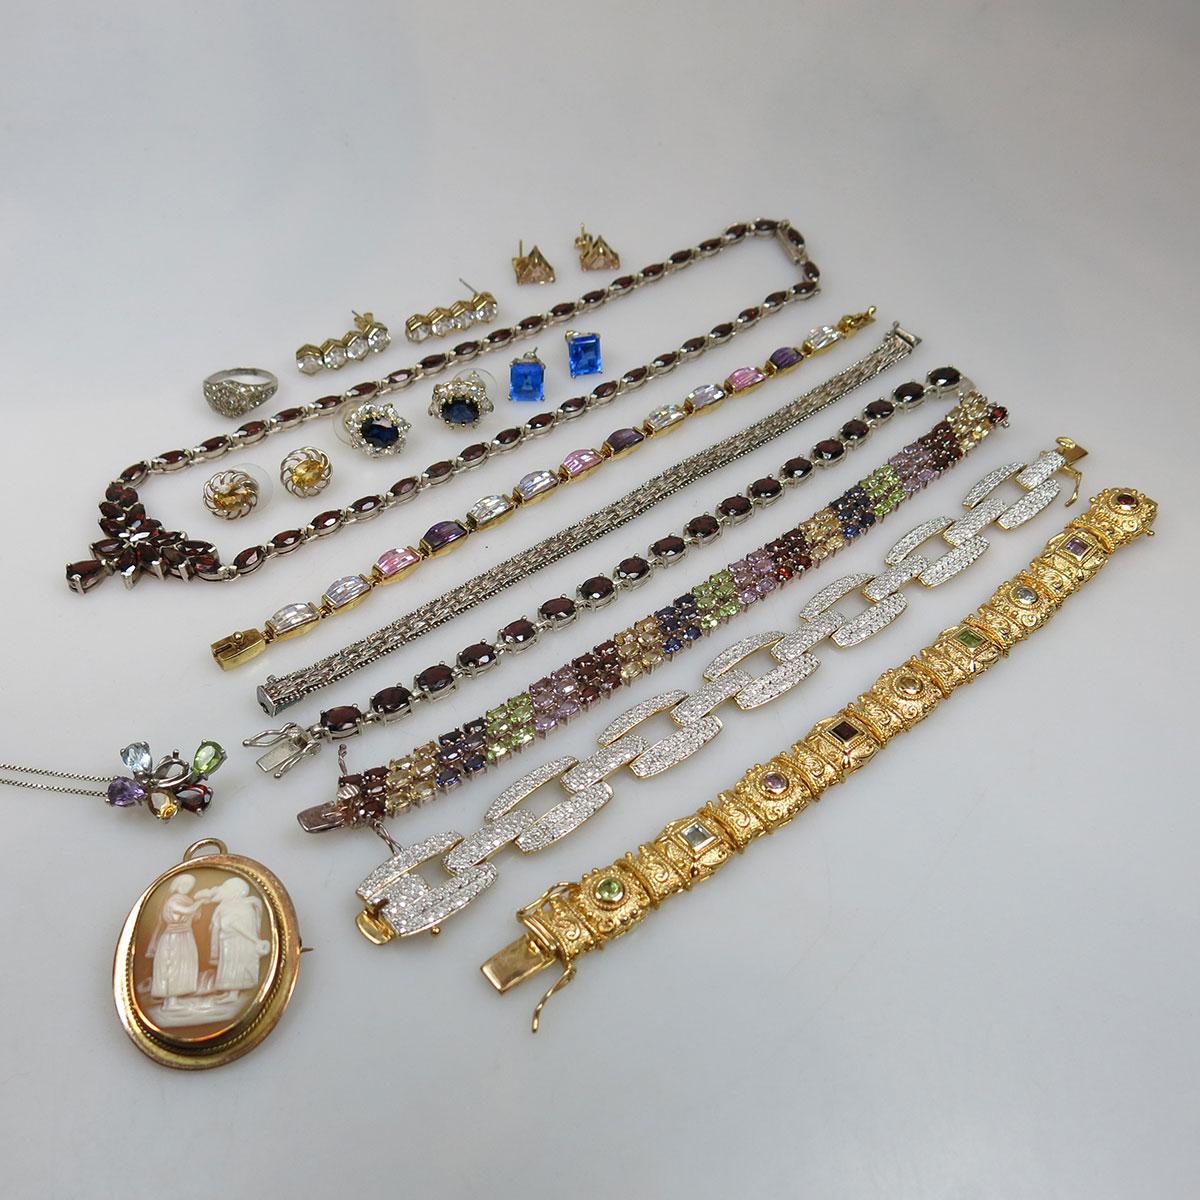 Quantity Of Silver Jewellery